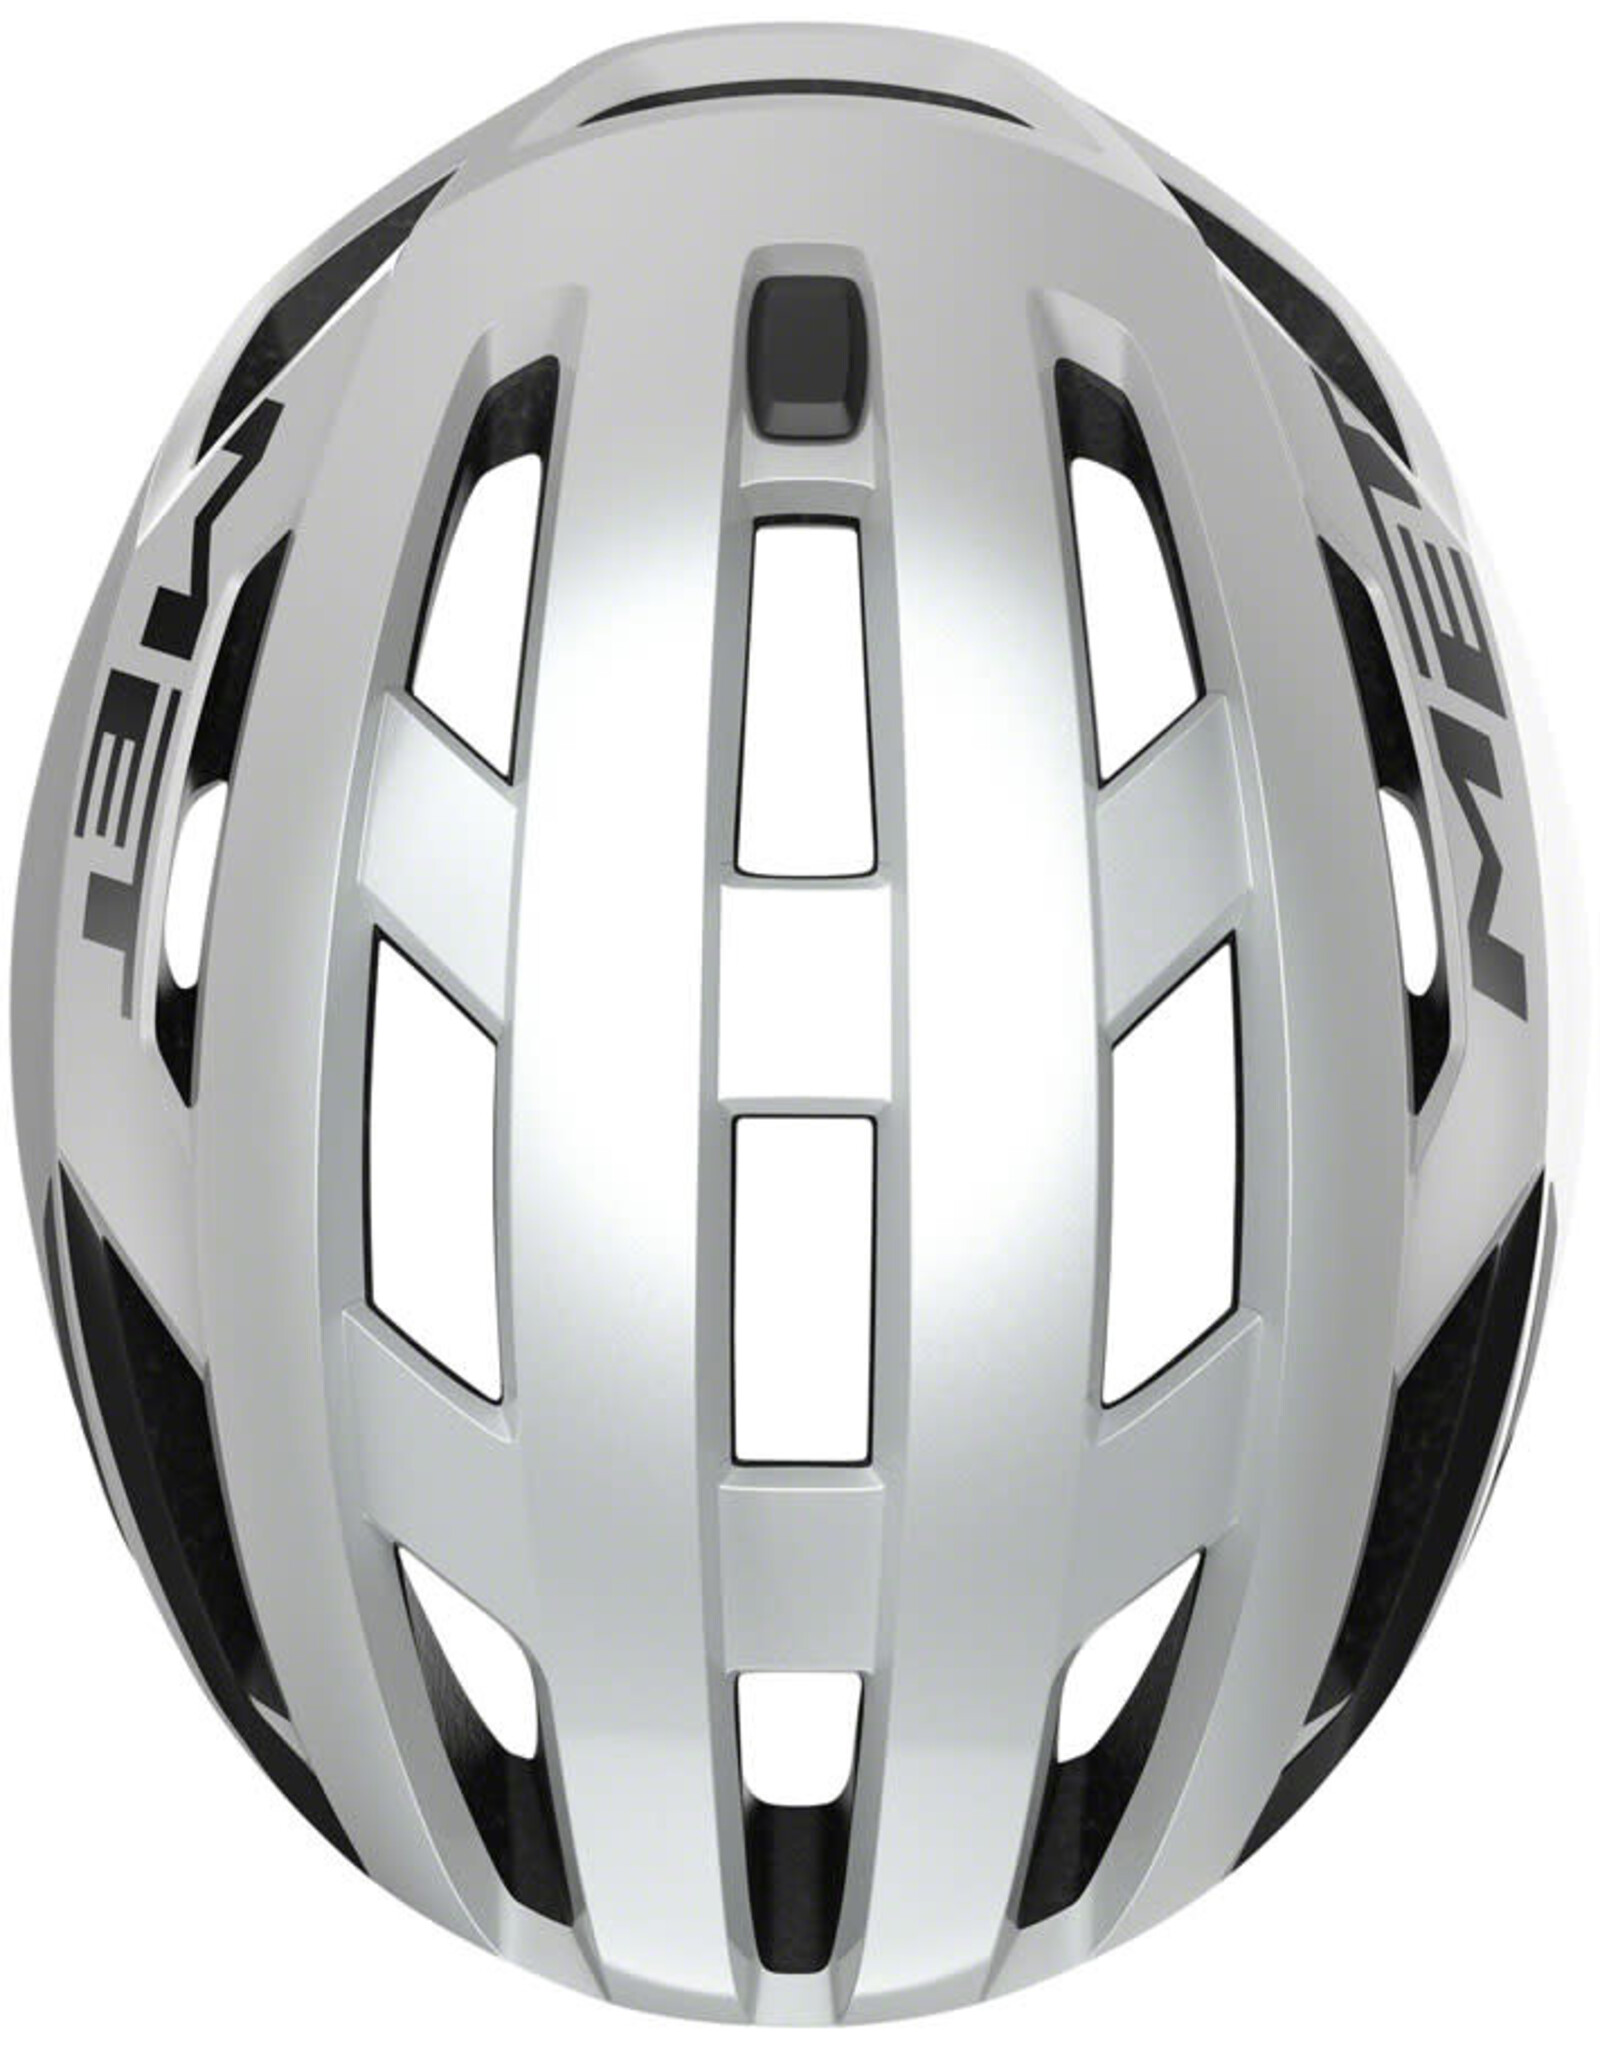 MET Helmets MET Vinci MIPS Helmet - White/Silver, Matte